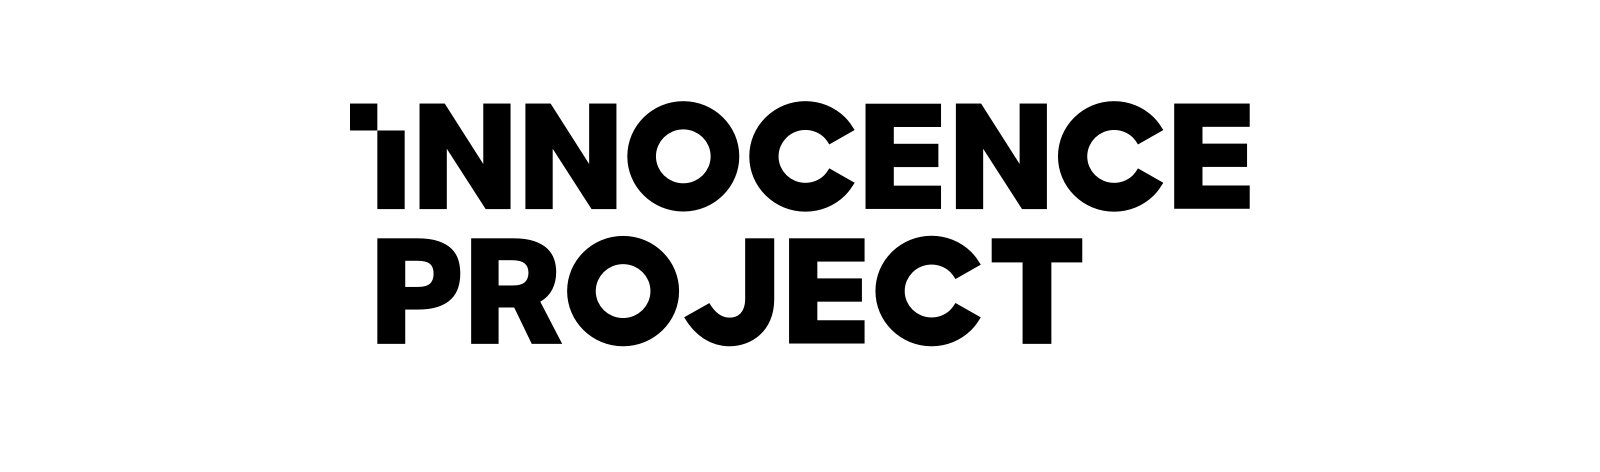 innocence-project-Rebrand-logo-madeo-2019-white.jpg